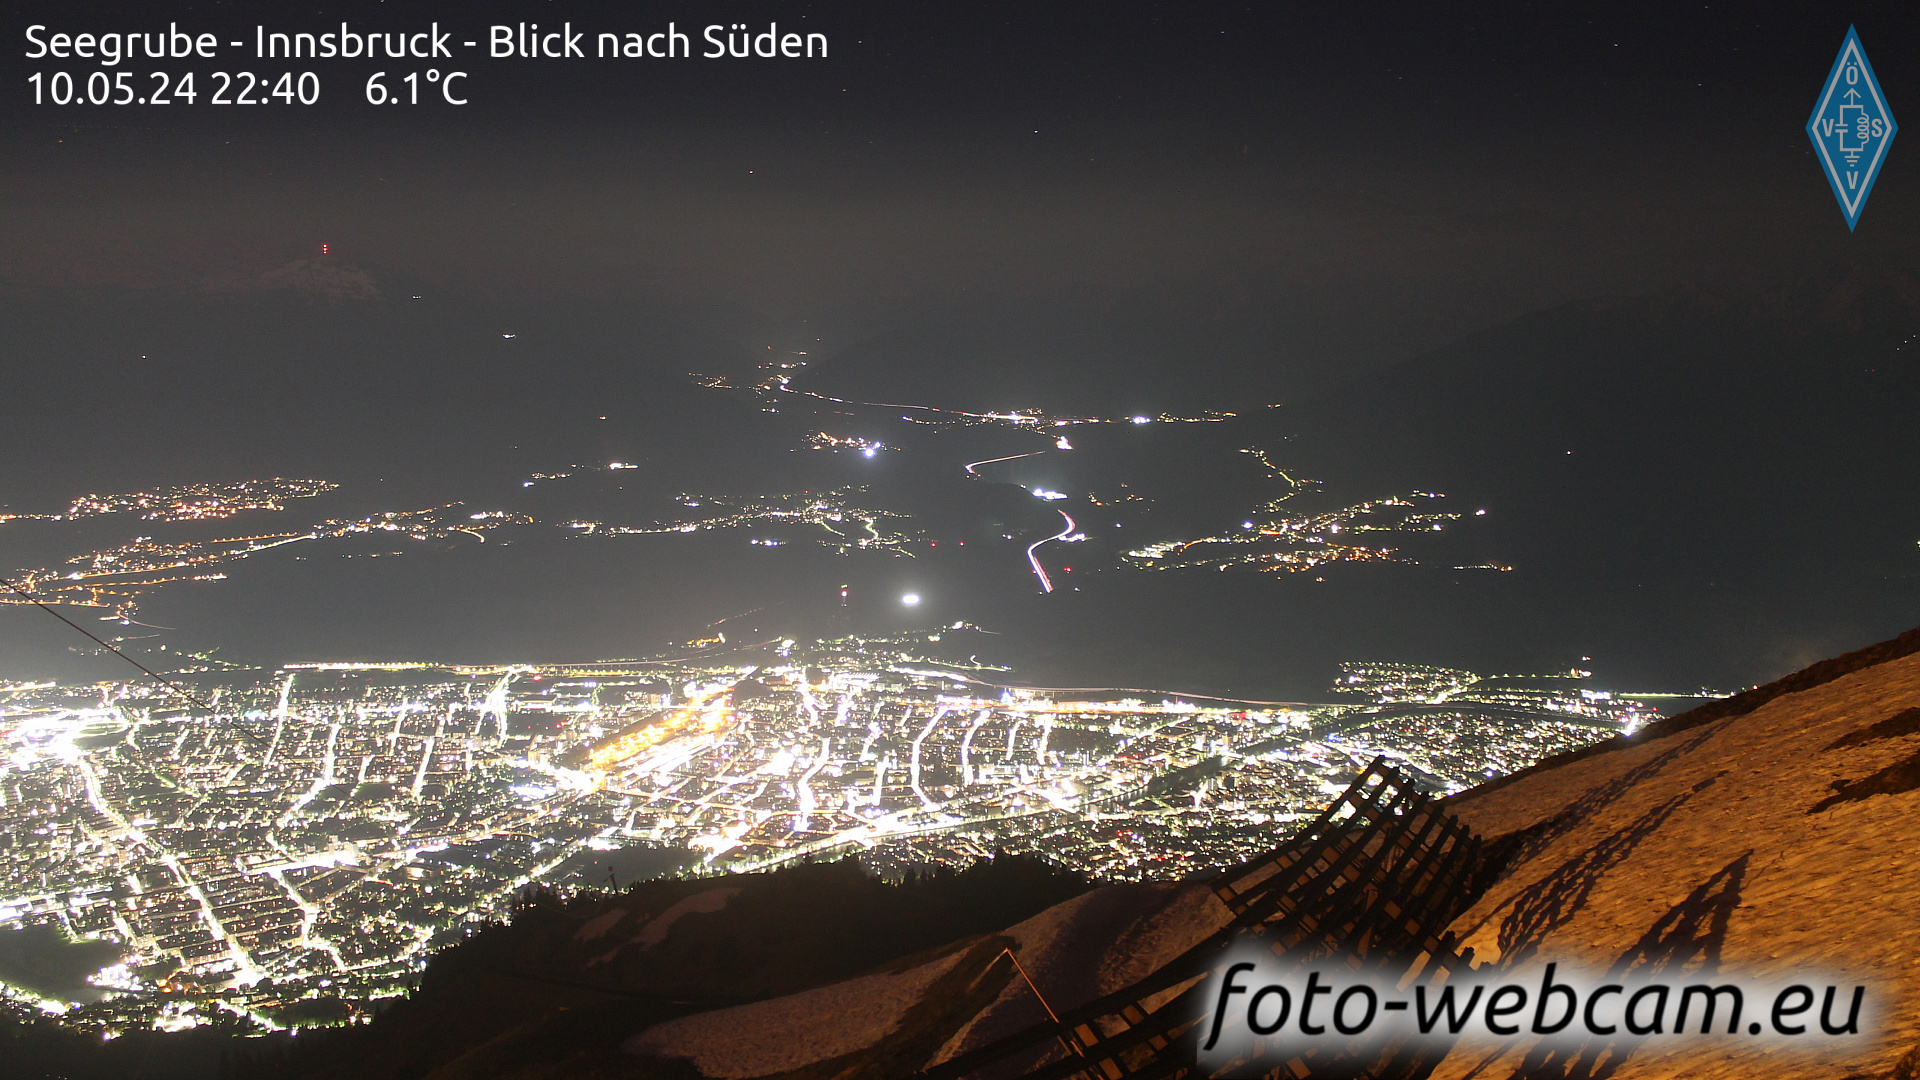 Innsbruck Gio. 22:48